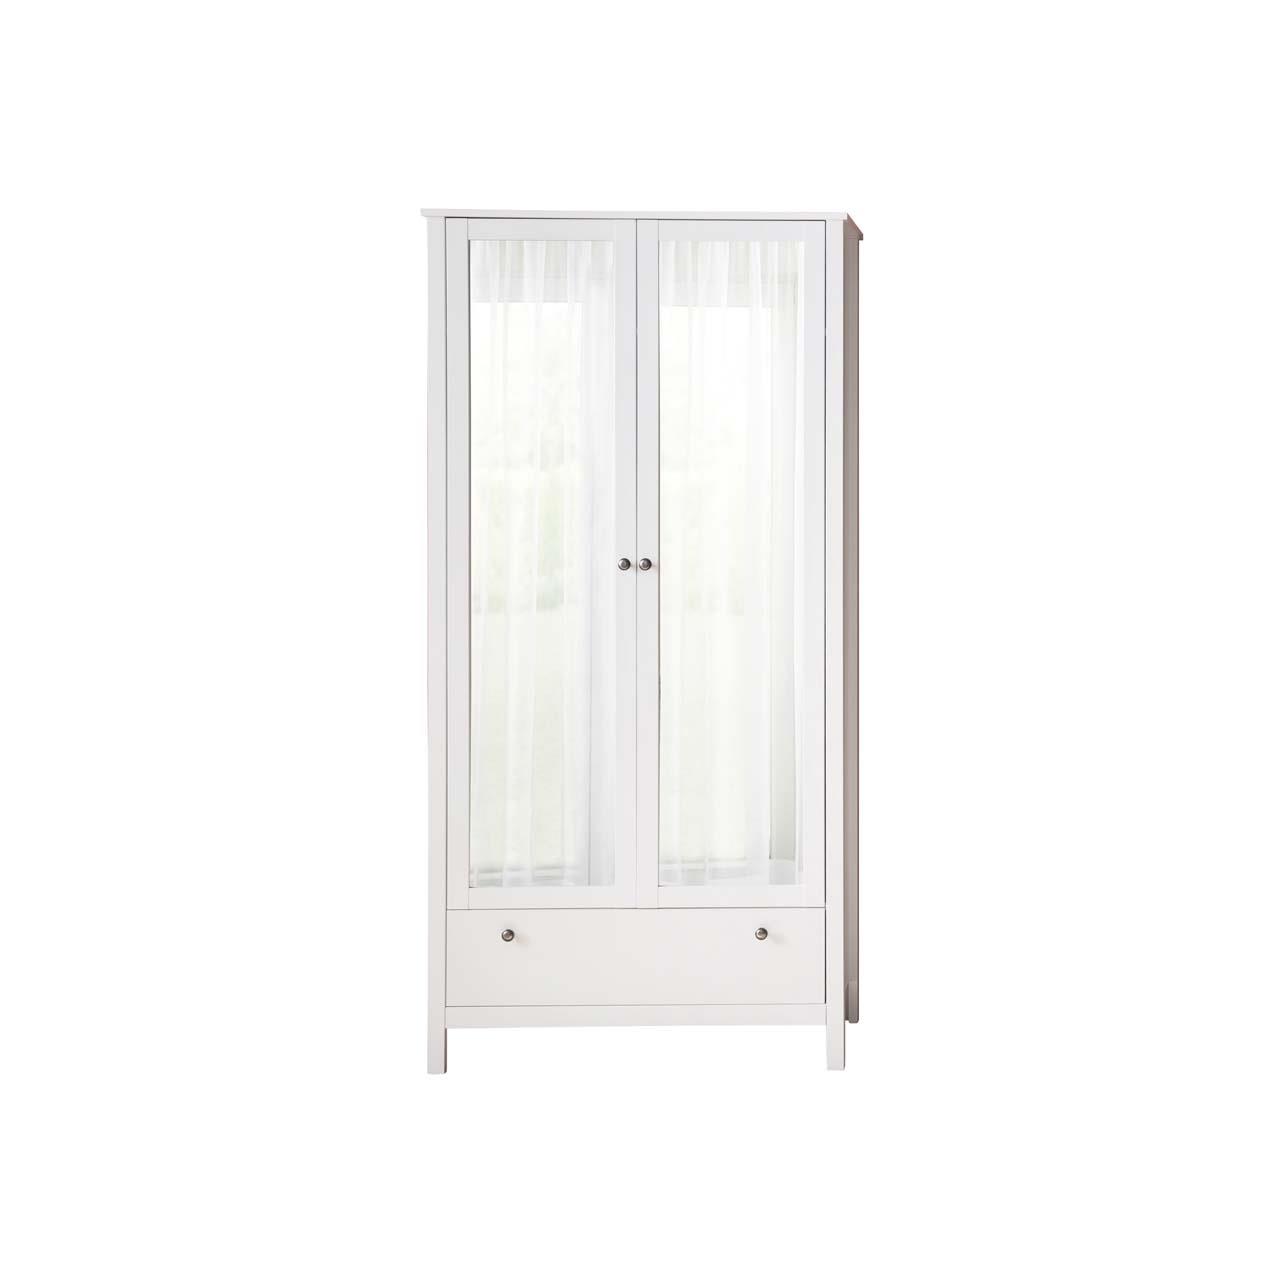 FonQ Hioshop Orla kledingkast 2 deuren en 1 lade, wit, spiegelglas. aanbieding